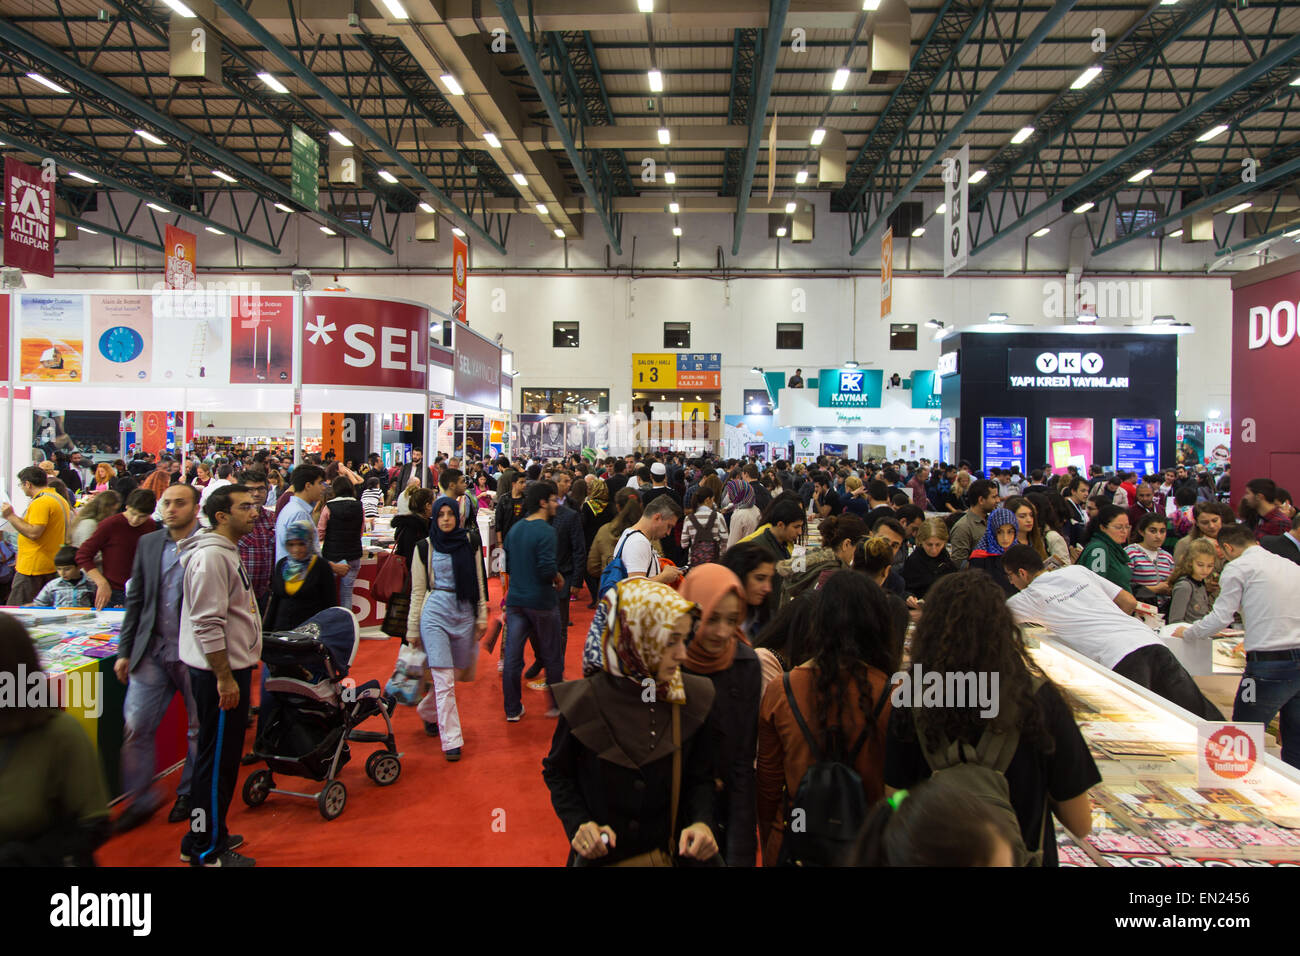 ISTANBUL, TURKEY - NOVEMBER 09, 2014: People in Istanbul Book Fair. 33rd International Istanbul Book Fair held in Tuyap Fair and Stock Photo